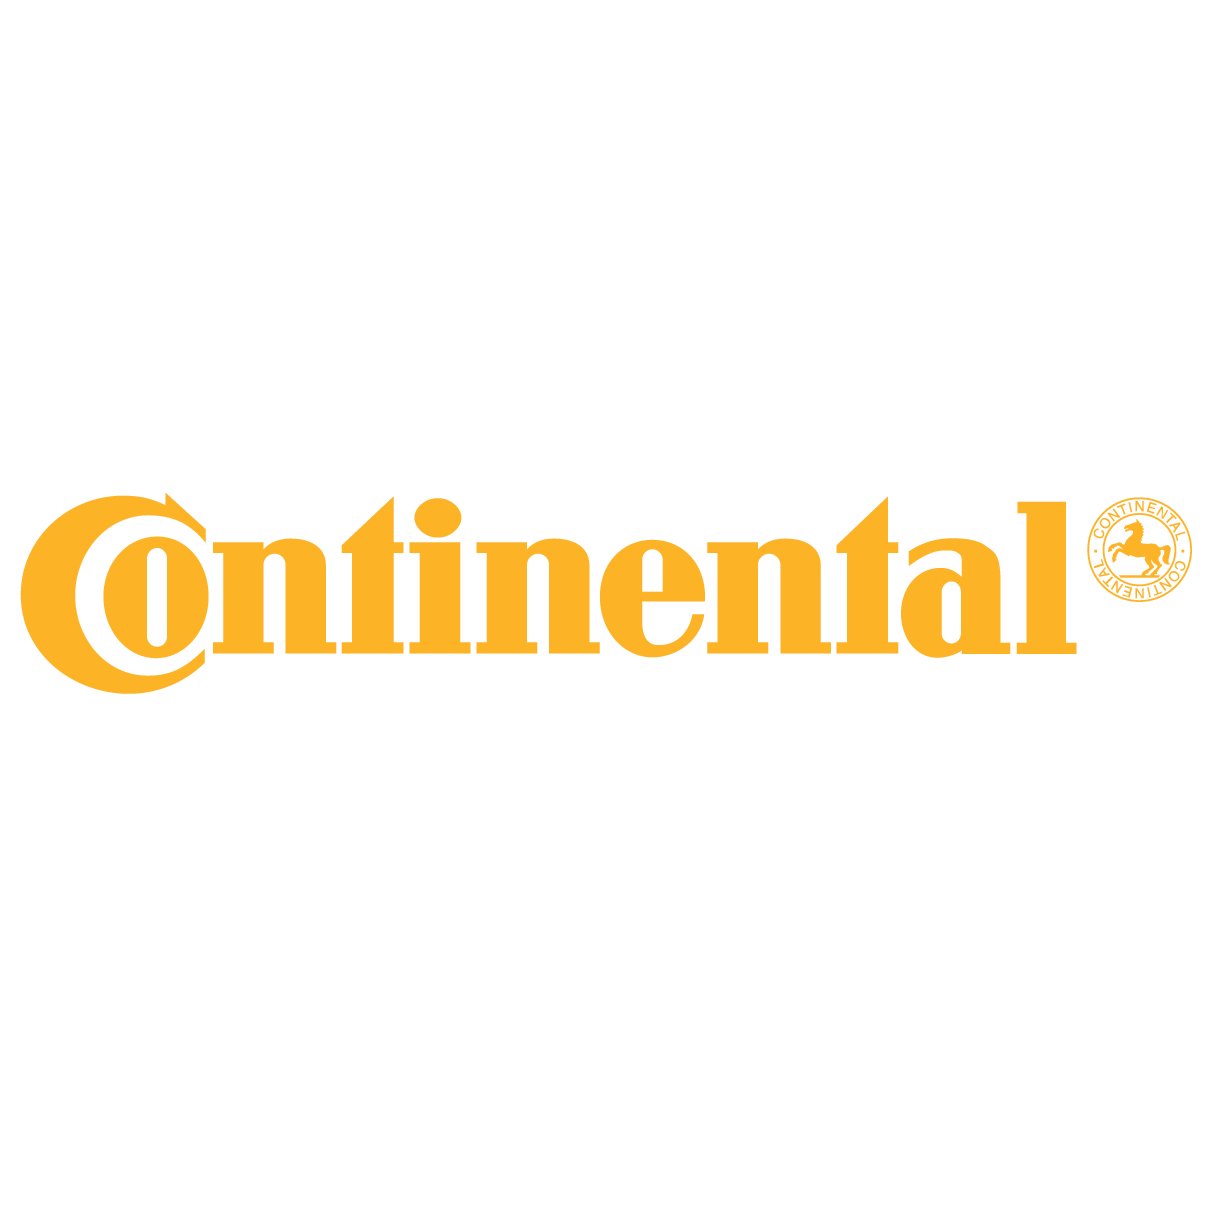 Continental logo.png